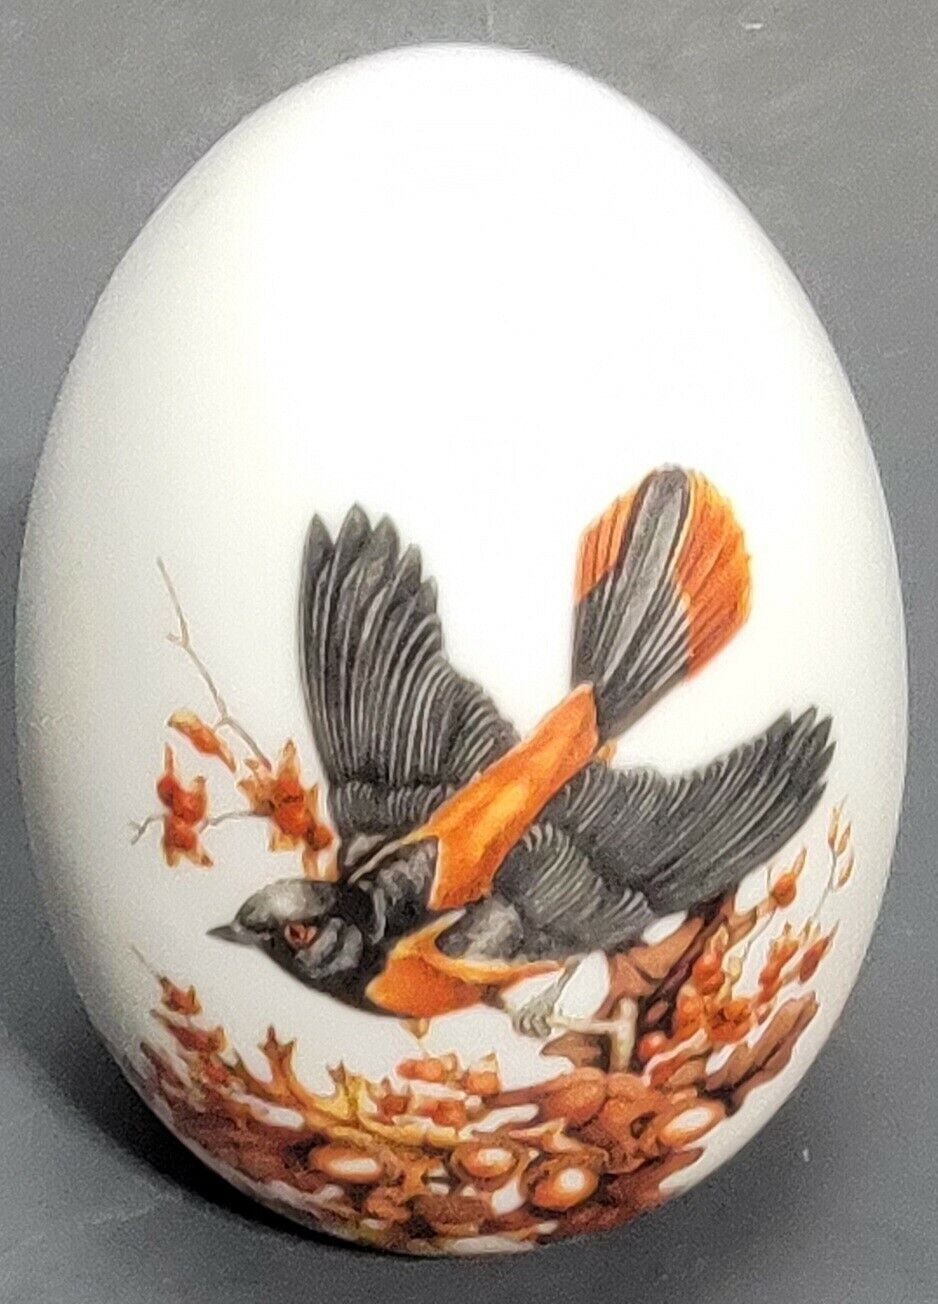 Avon - Autumn Painted Egg - Autumn brings magic changes Fall Bird collectable 